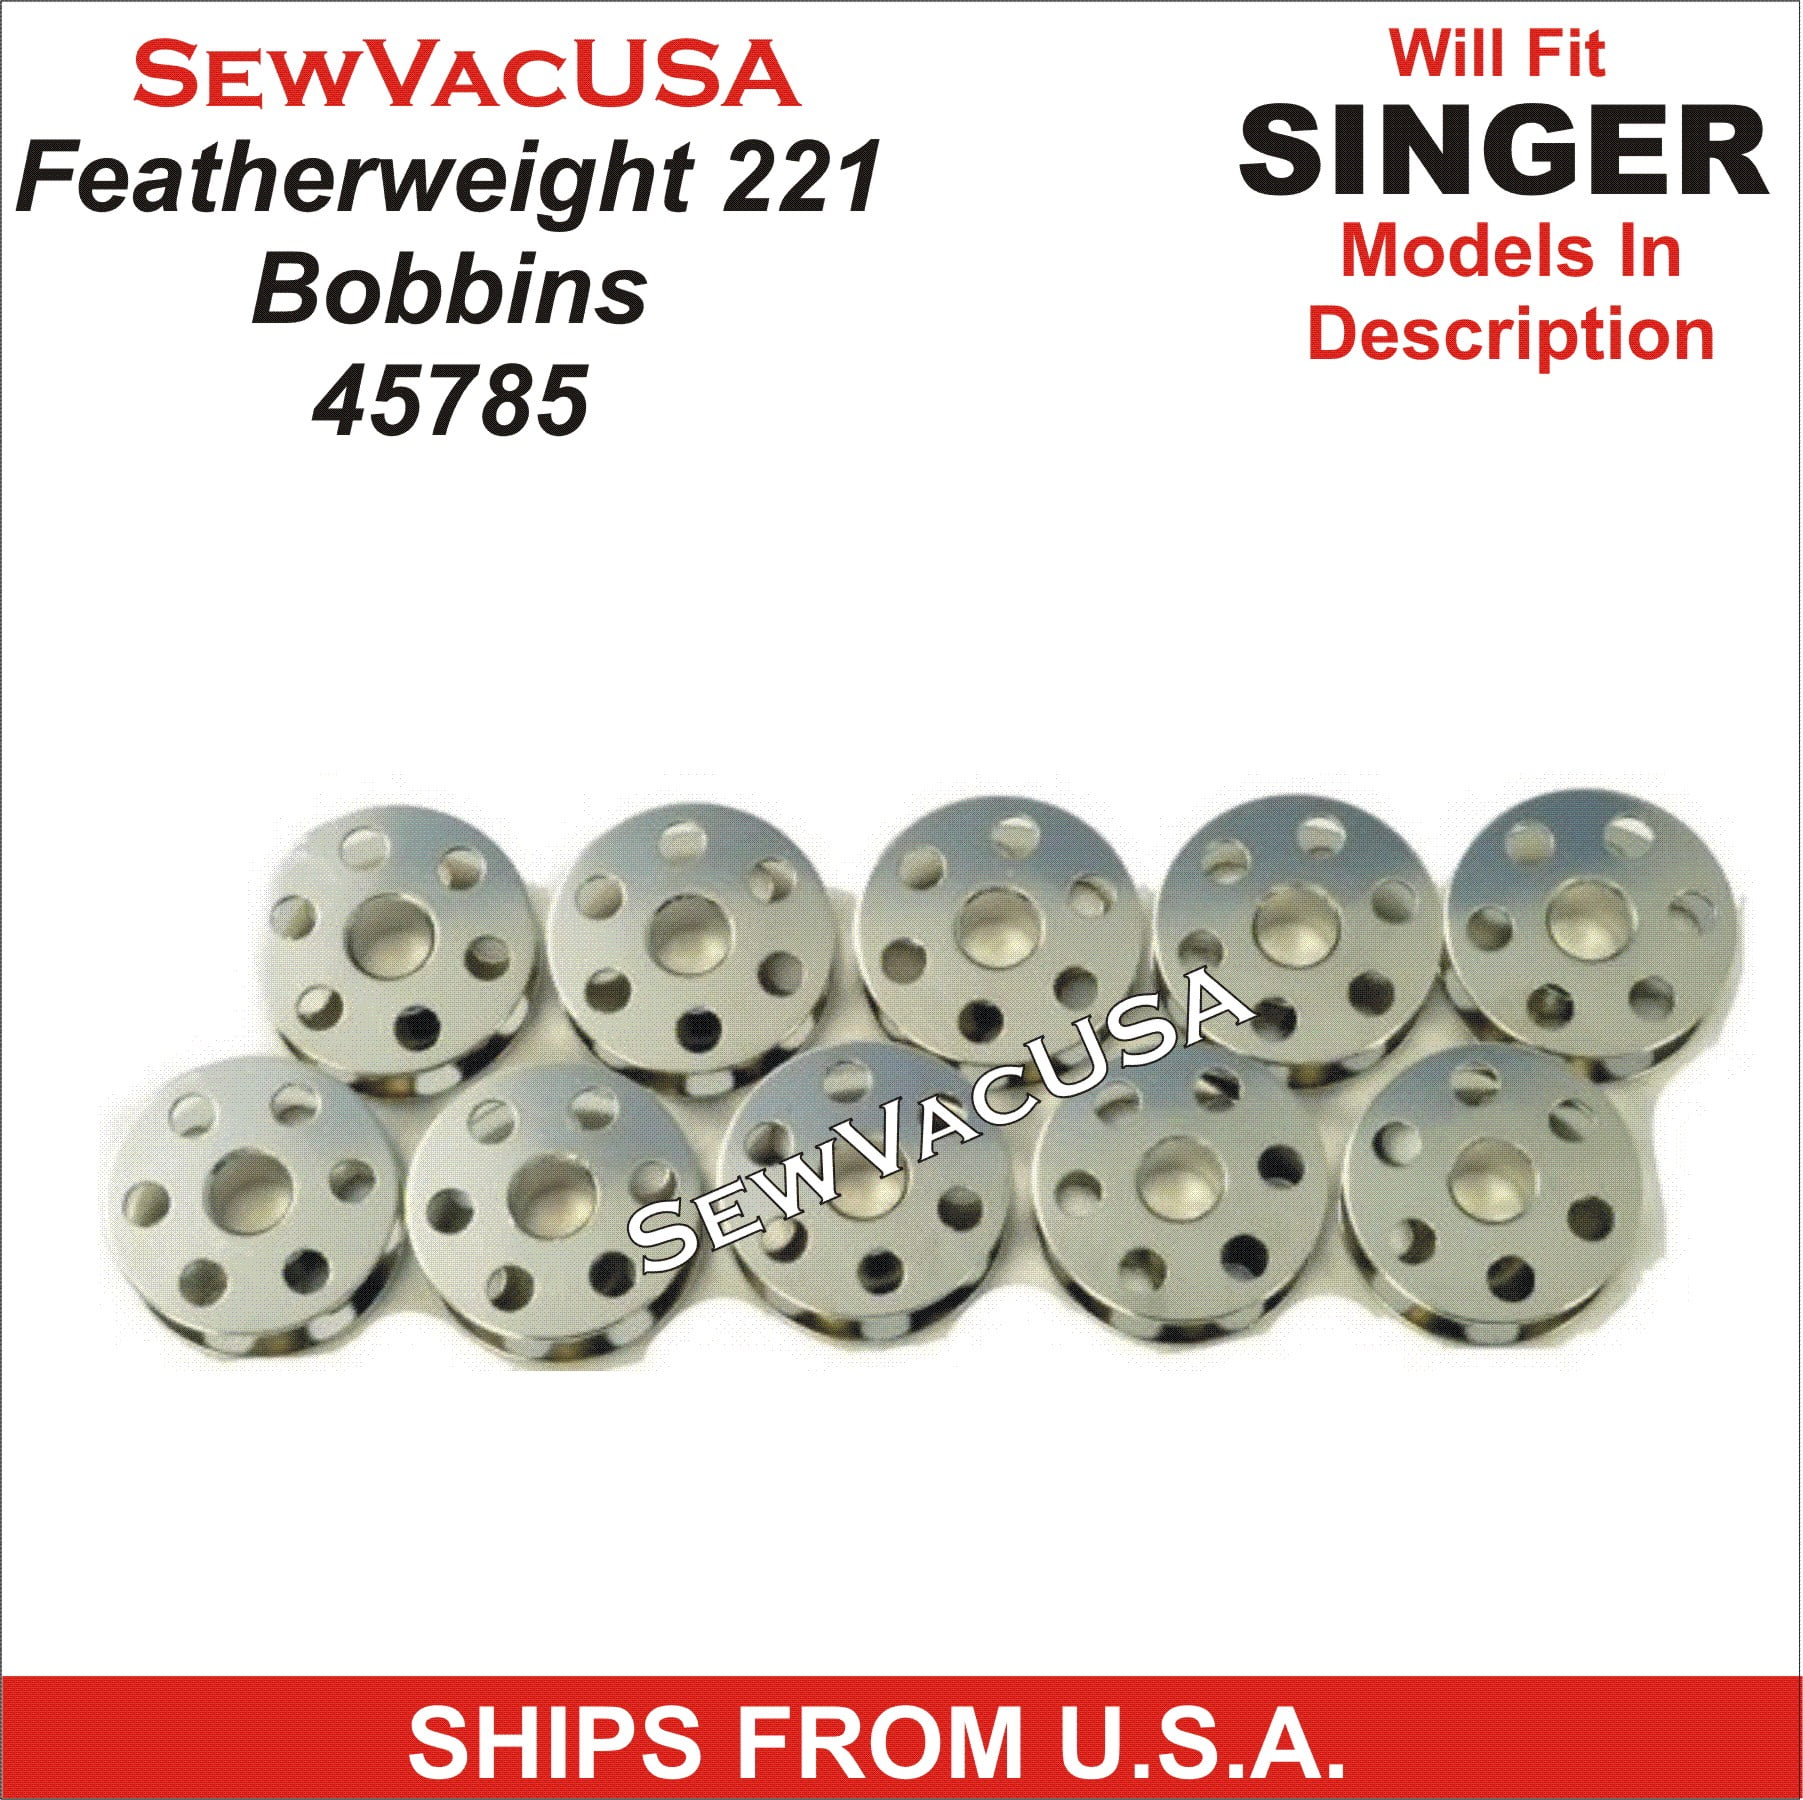 24 Singer Bobbins For Models 221/222 Featherweights & Singer Model 301 Machine 